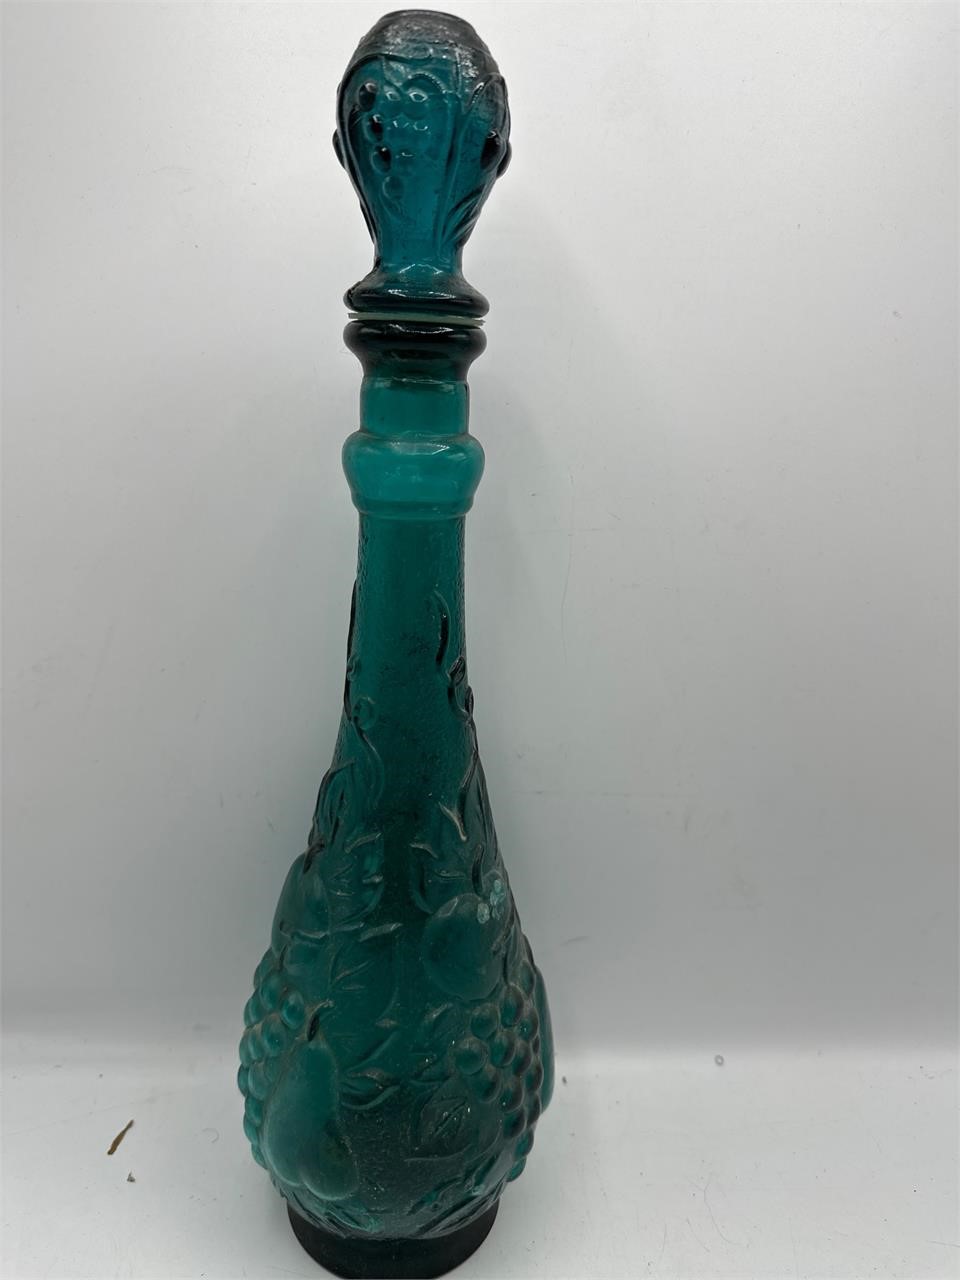 Vintage Empoli glass decanter